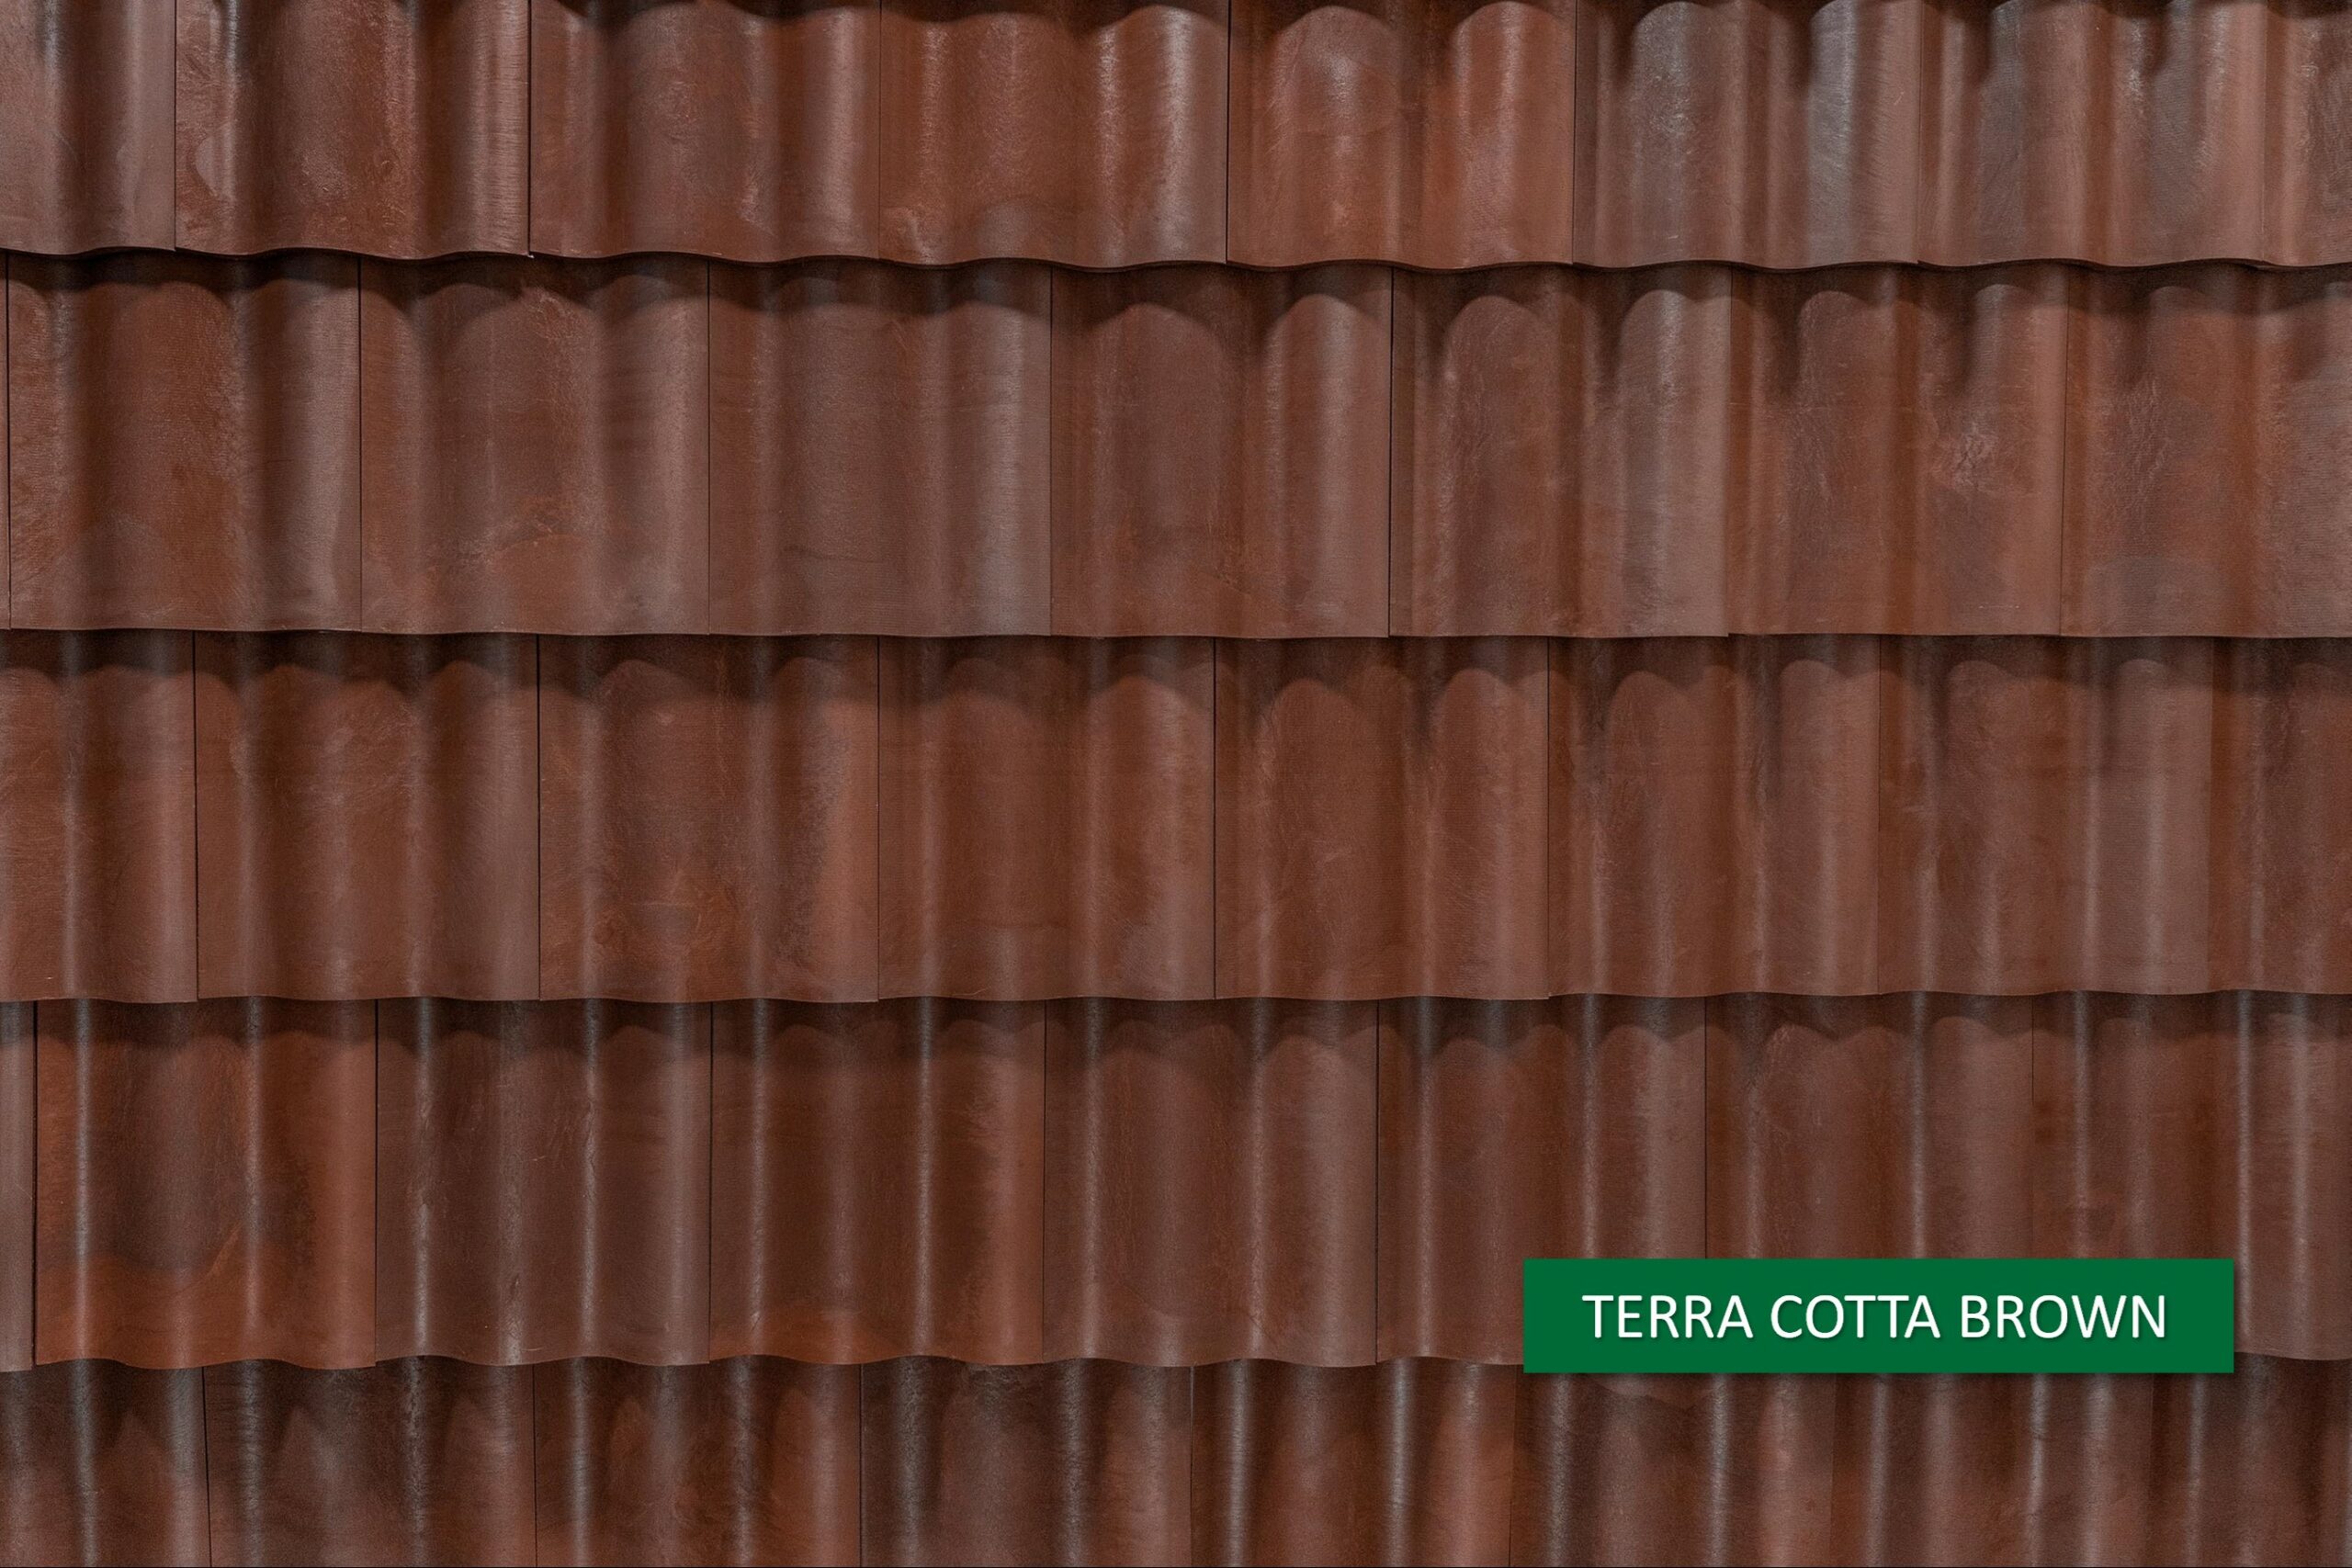 Brava Composite Spanish Barrel Tile terra cotta brown